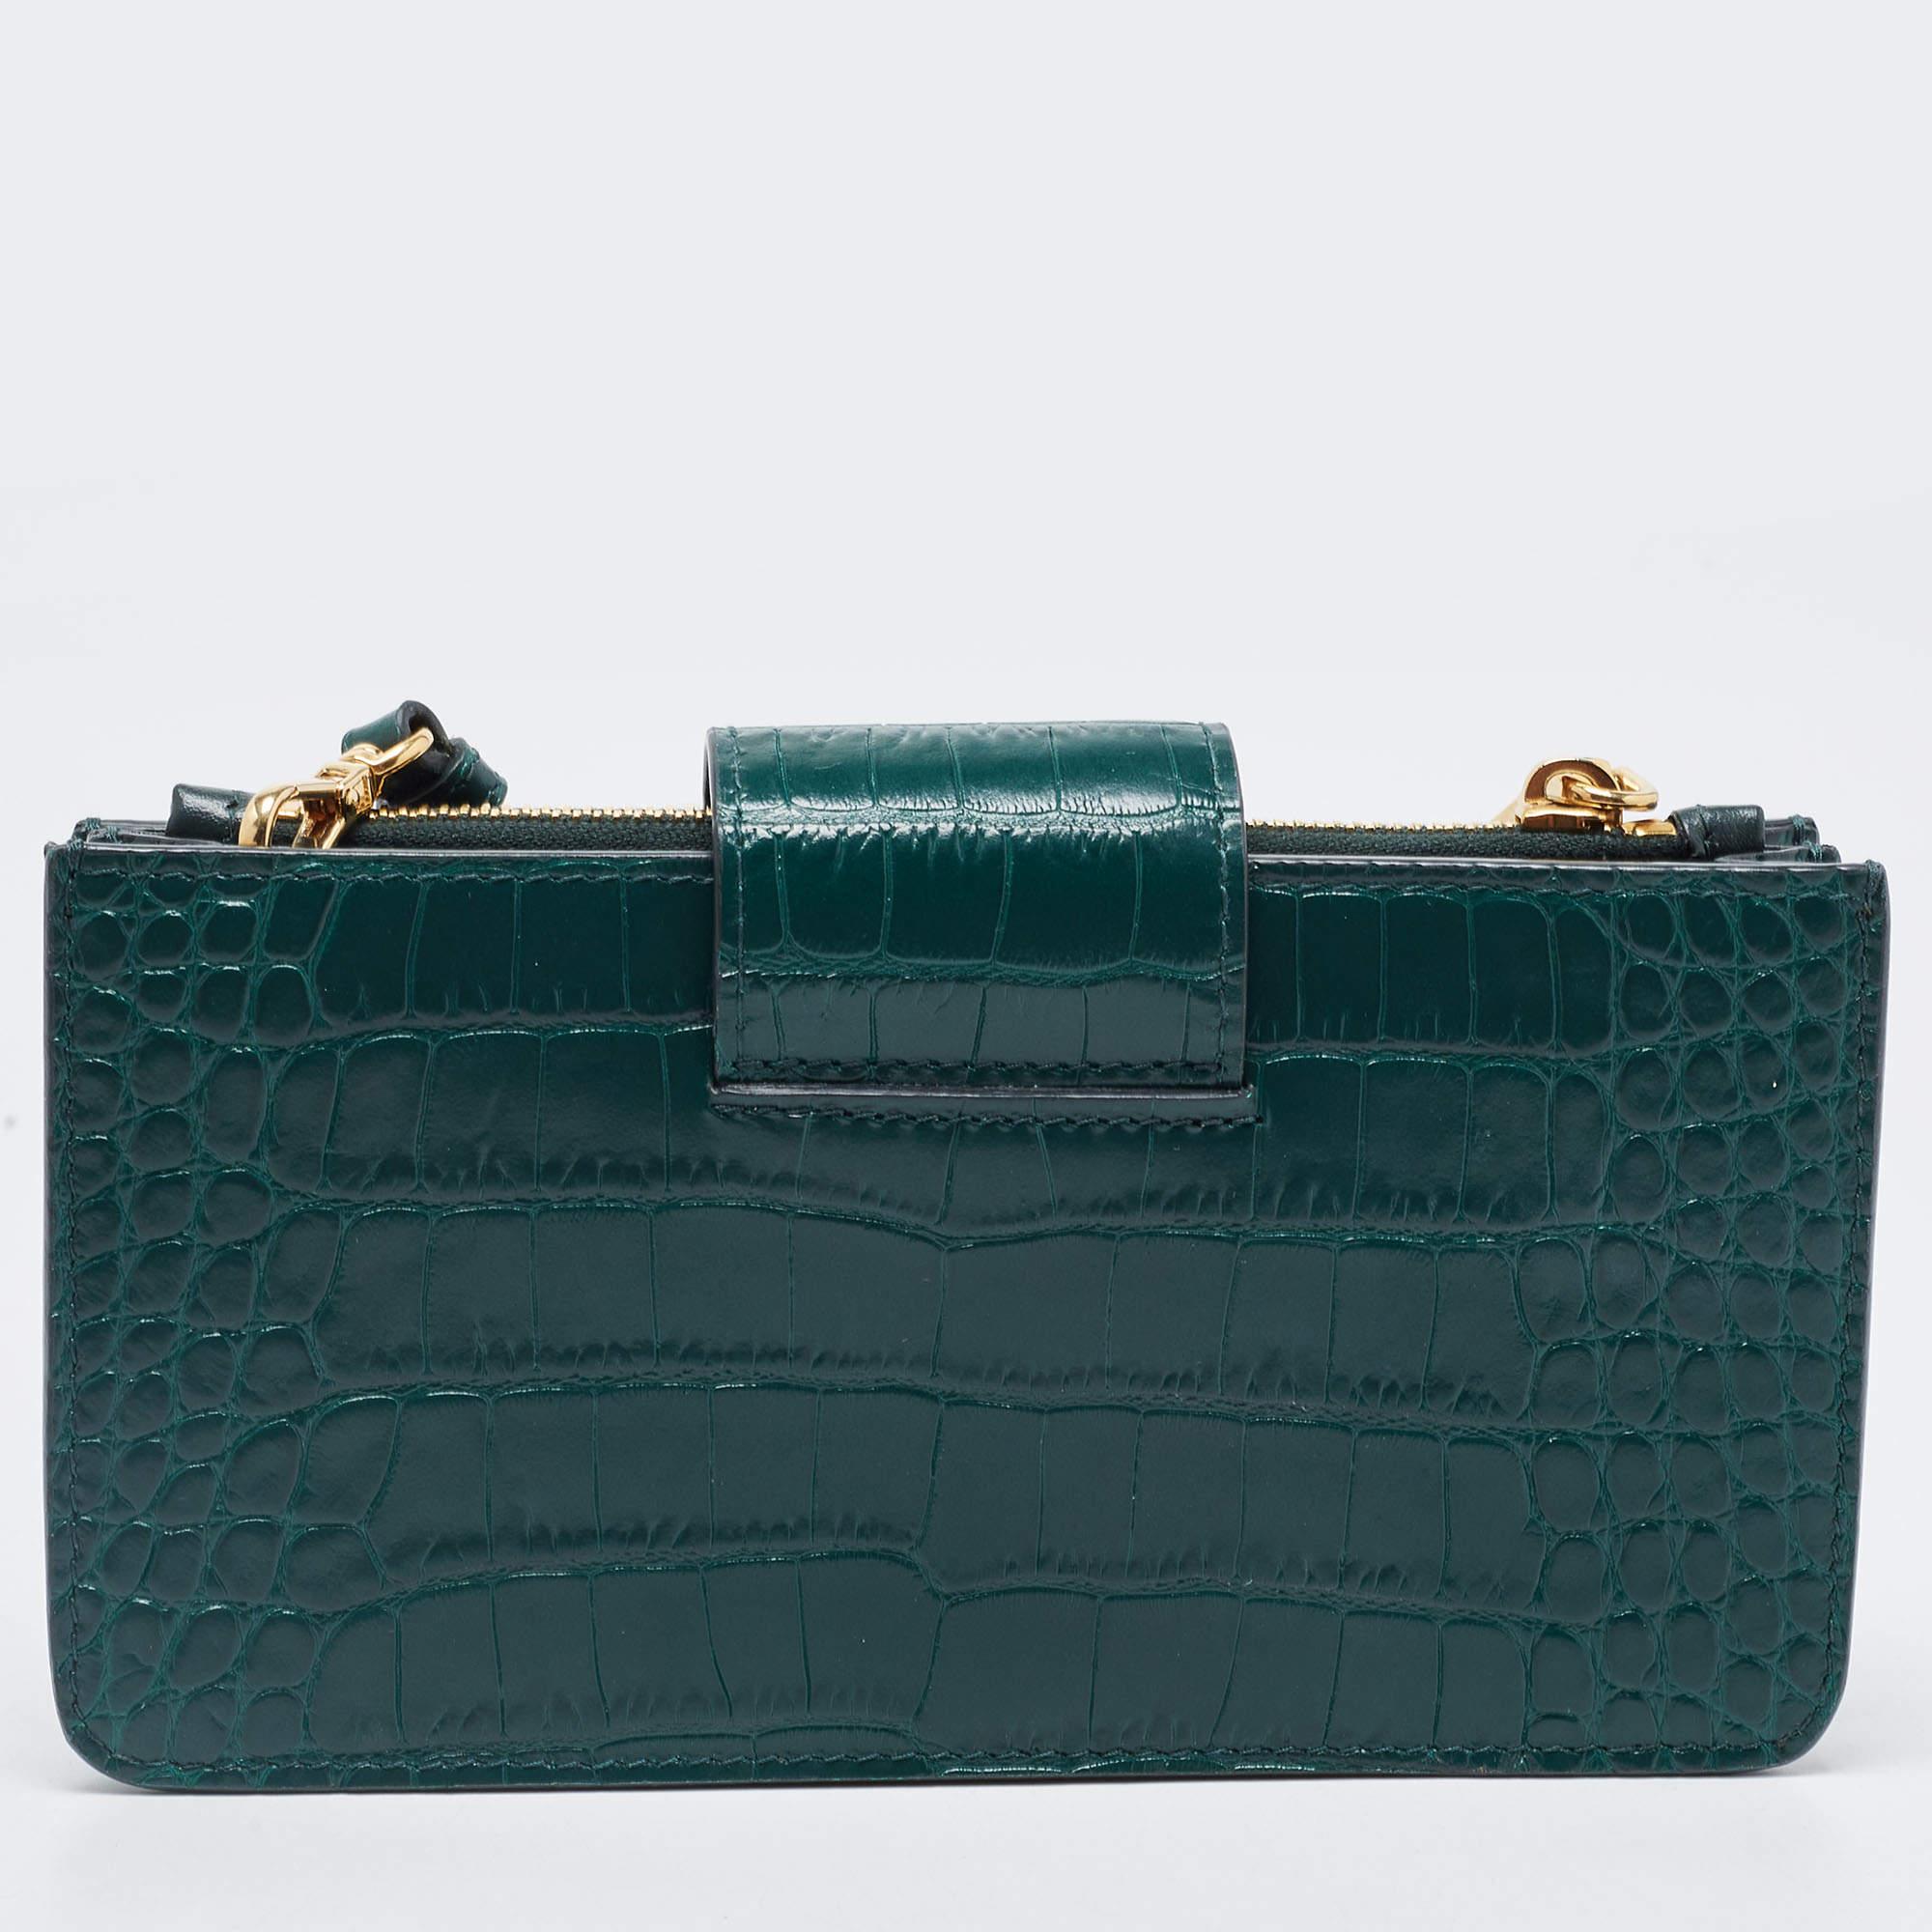 Miu Miu Green Croc Embossed Leather Phone Wallet Crossbody Bag 8